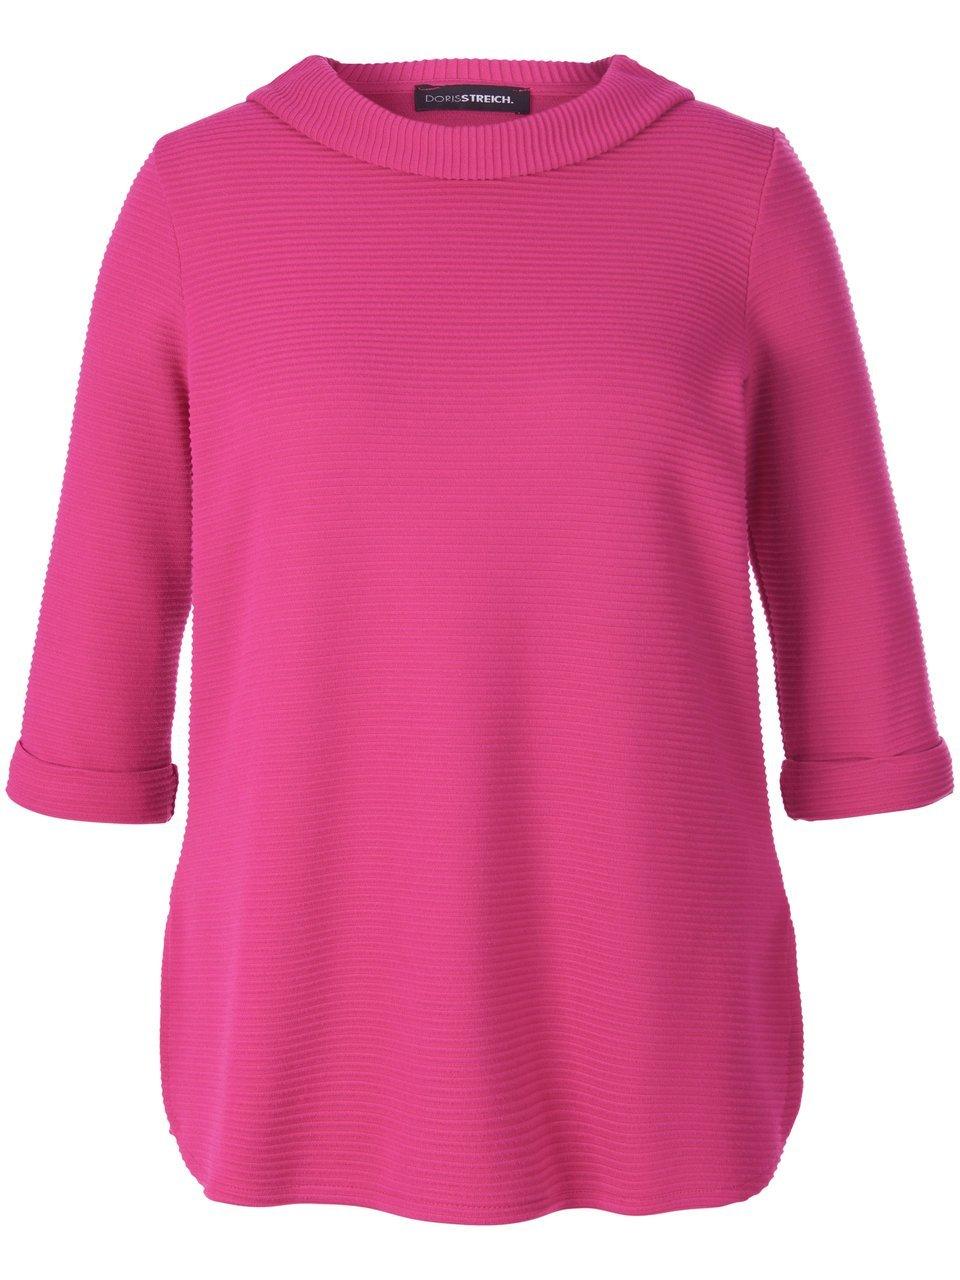 Sweatshirt 3/4-mouwen Van Doris Streich pink